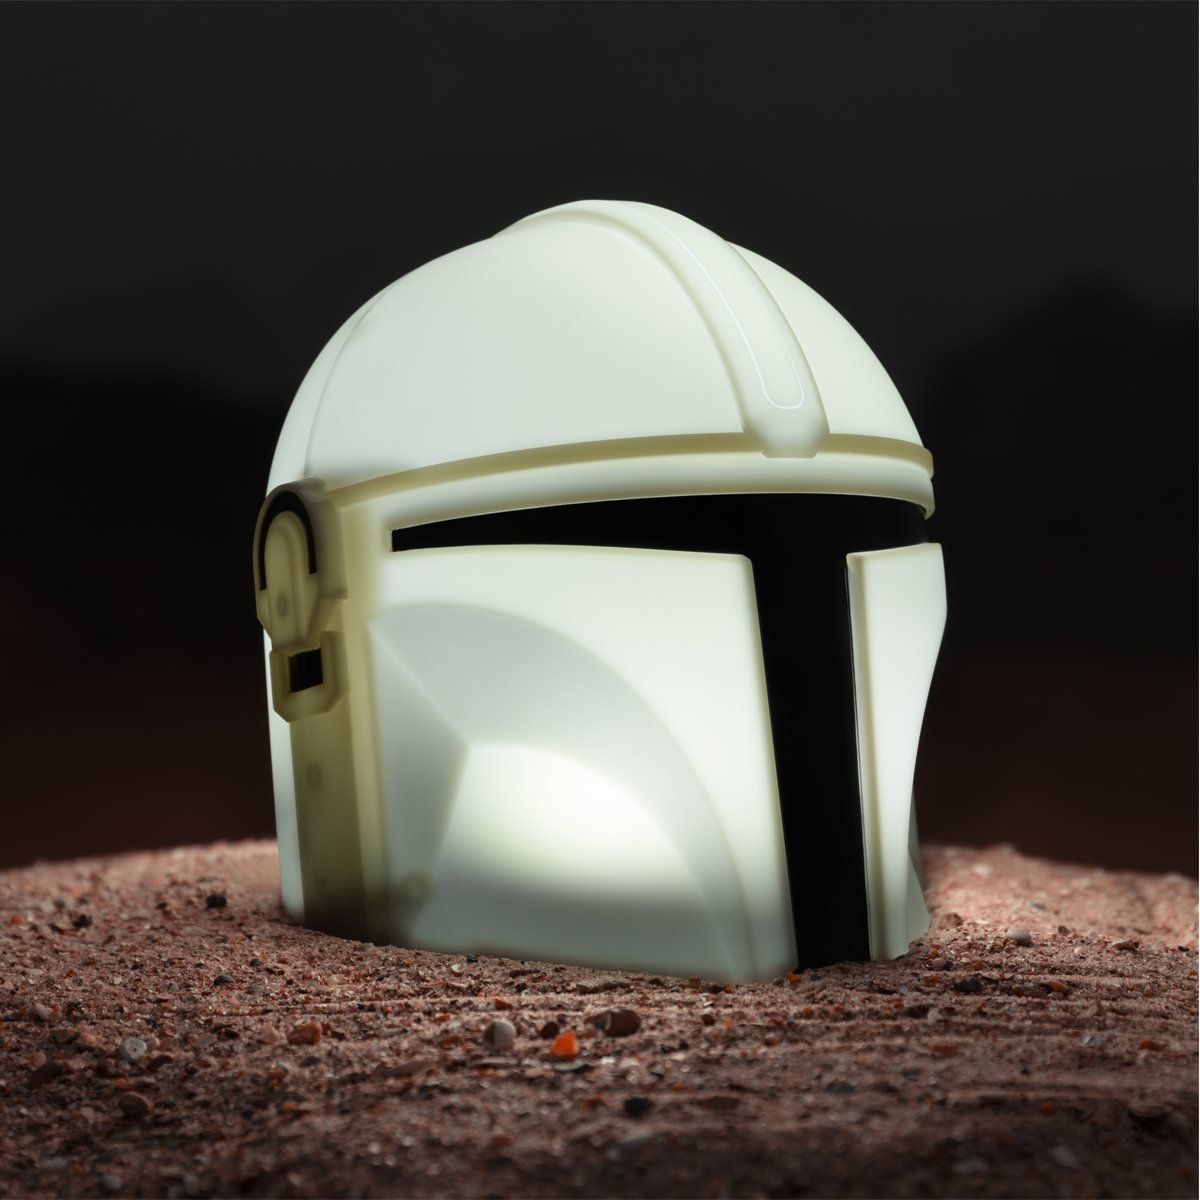 Star Wars Mandalorian Helmet Desktop Light 